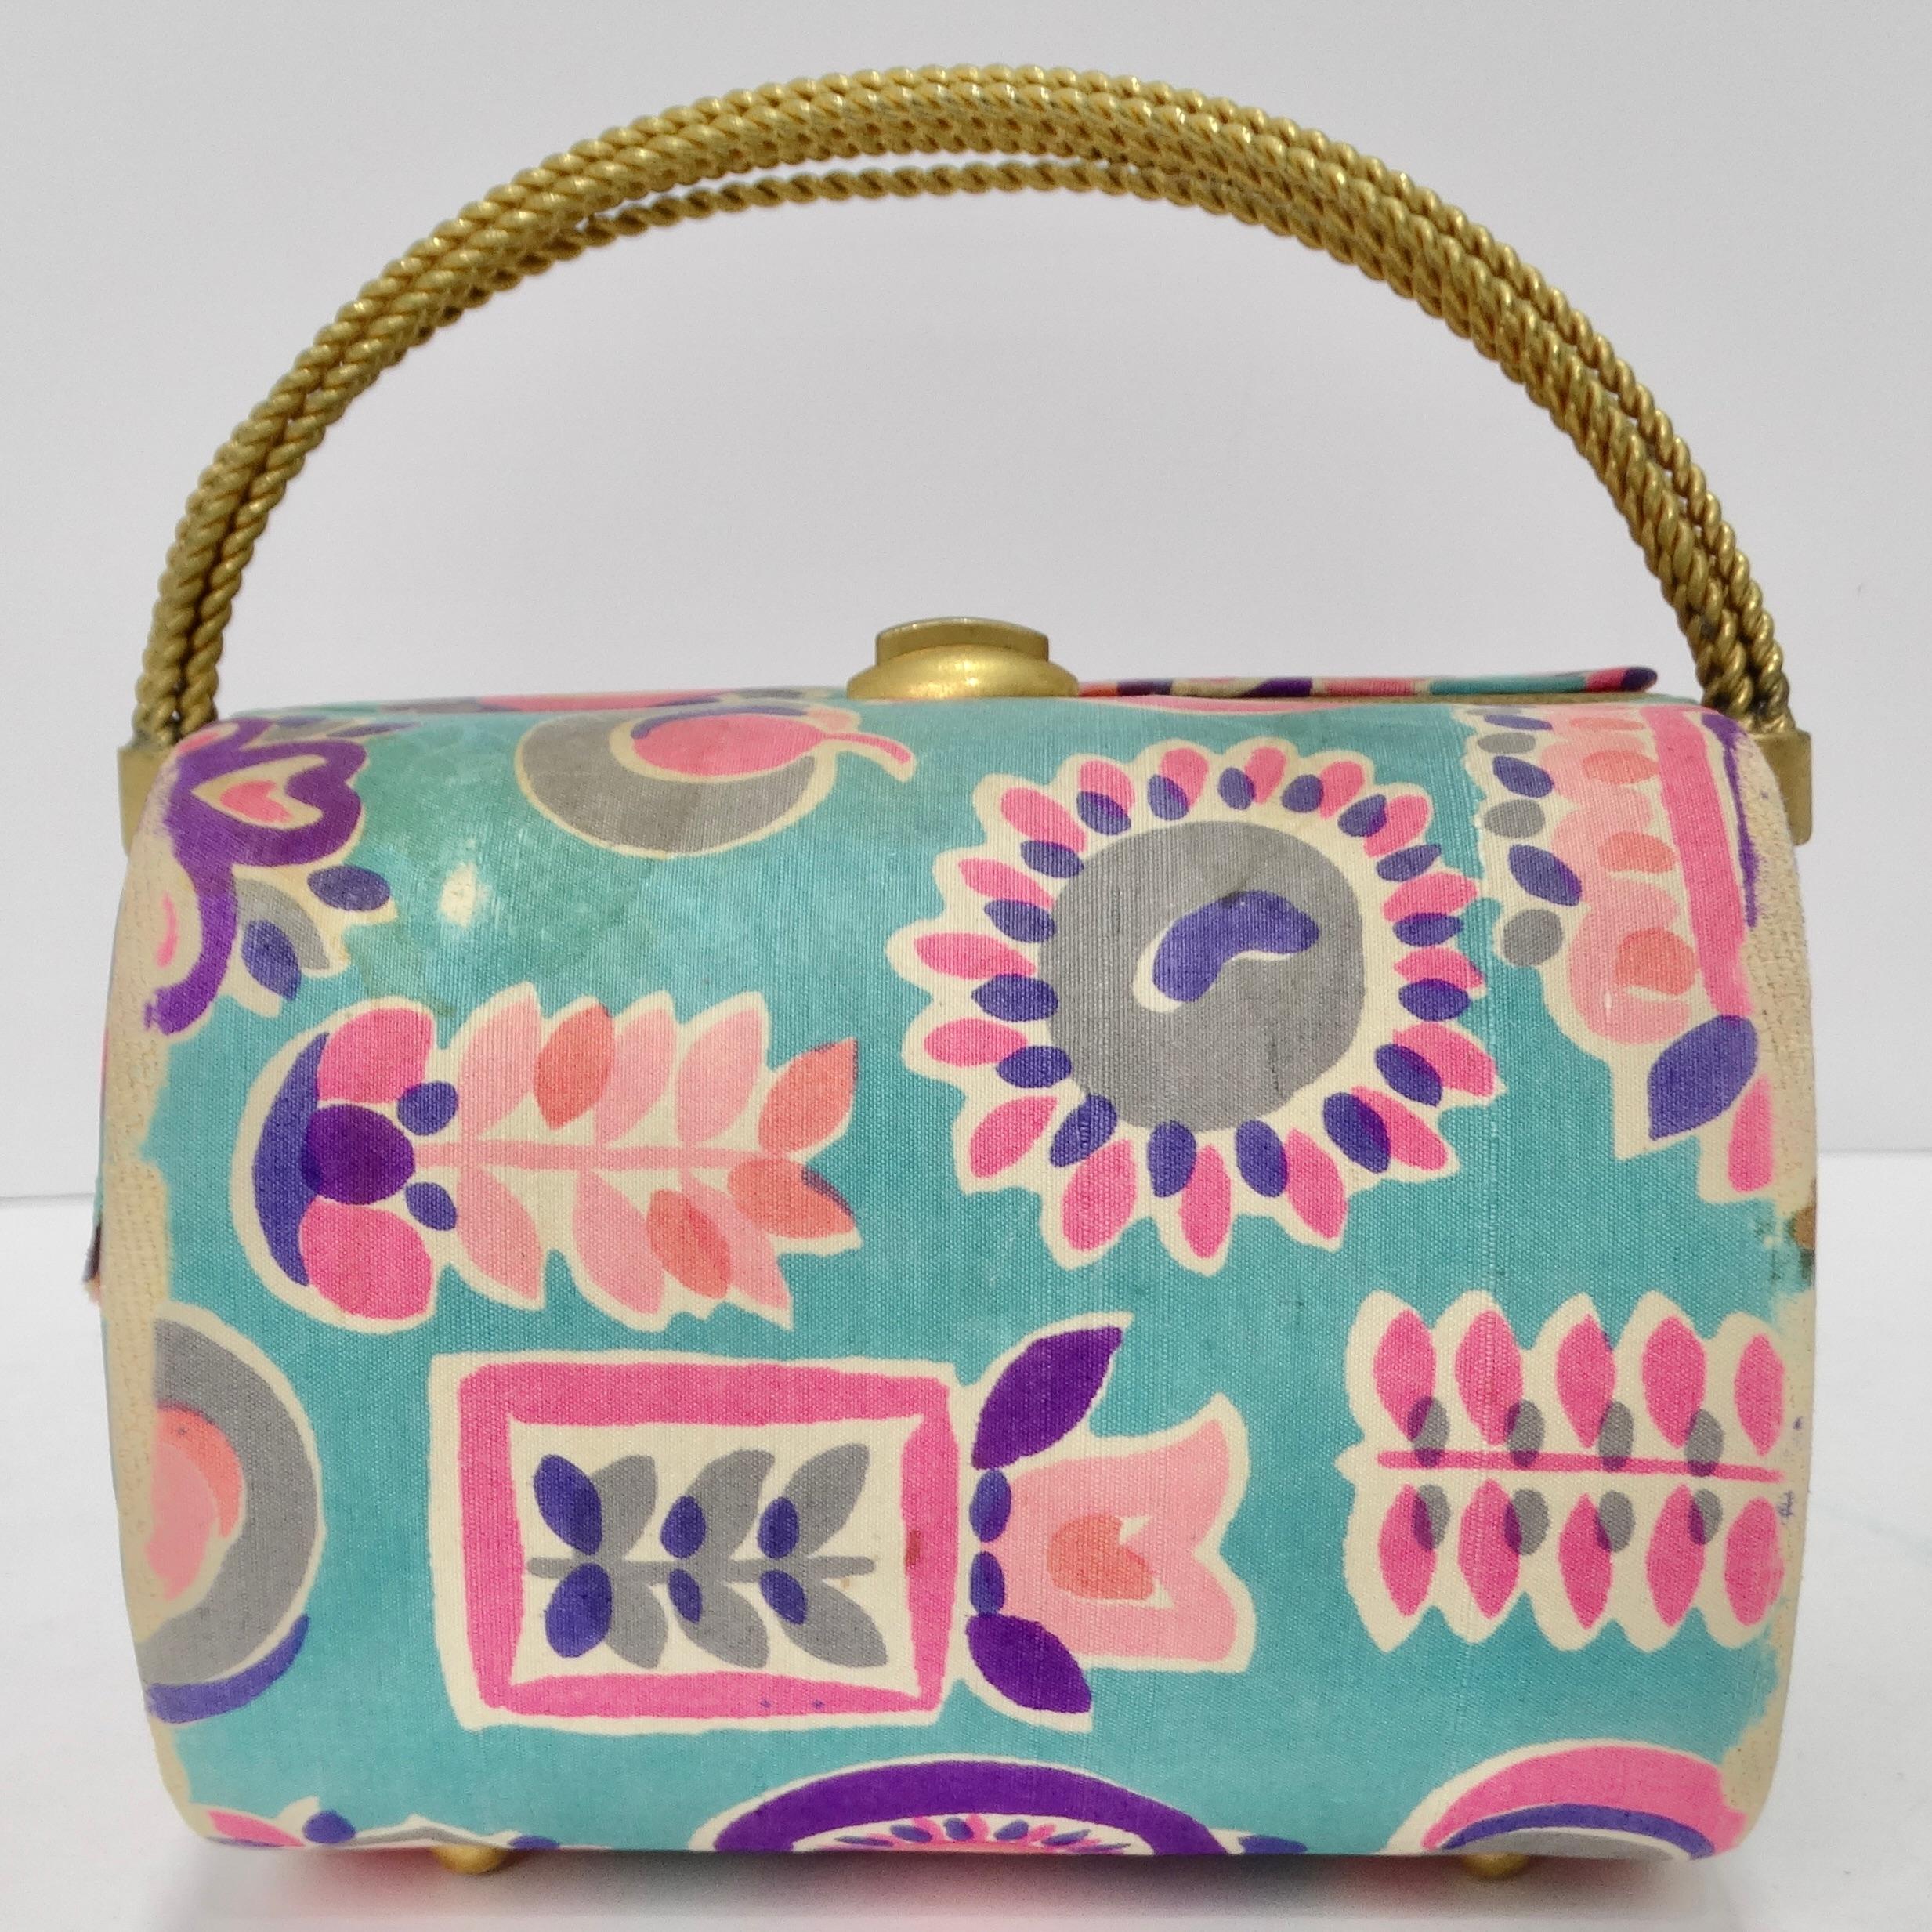  1960s Pucci Multicolor Minaudière Handbag Unisexe 